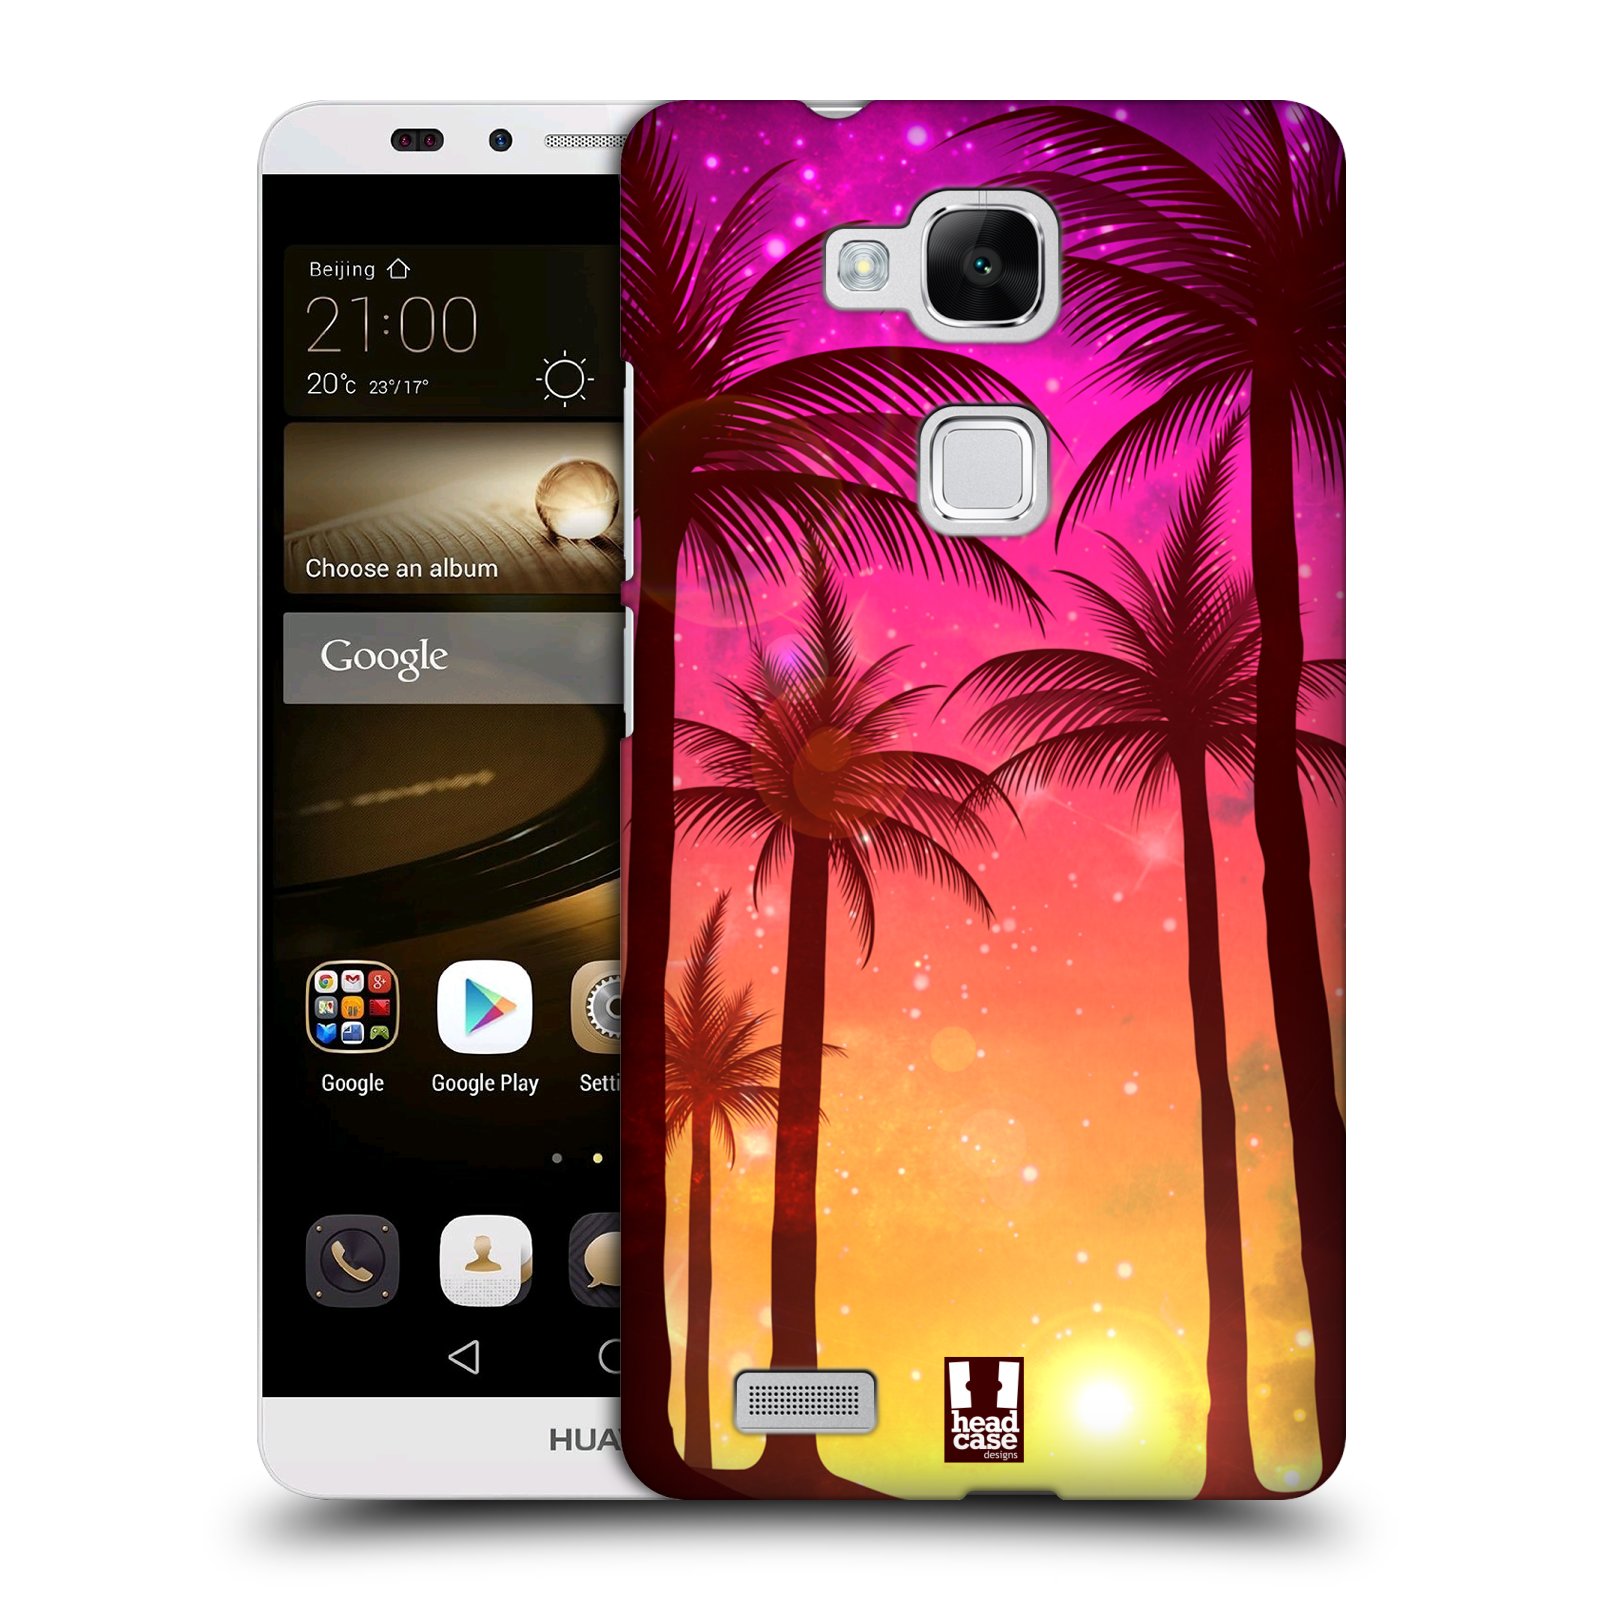 HEAD CASE plastový obal na mobil Huawei Mate 7 vzor Kreslený motiv silueta moře a palmy RŮŽOVÁ